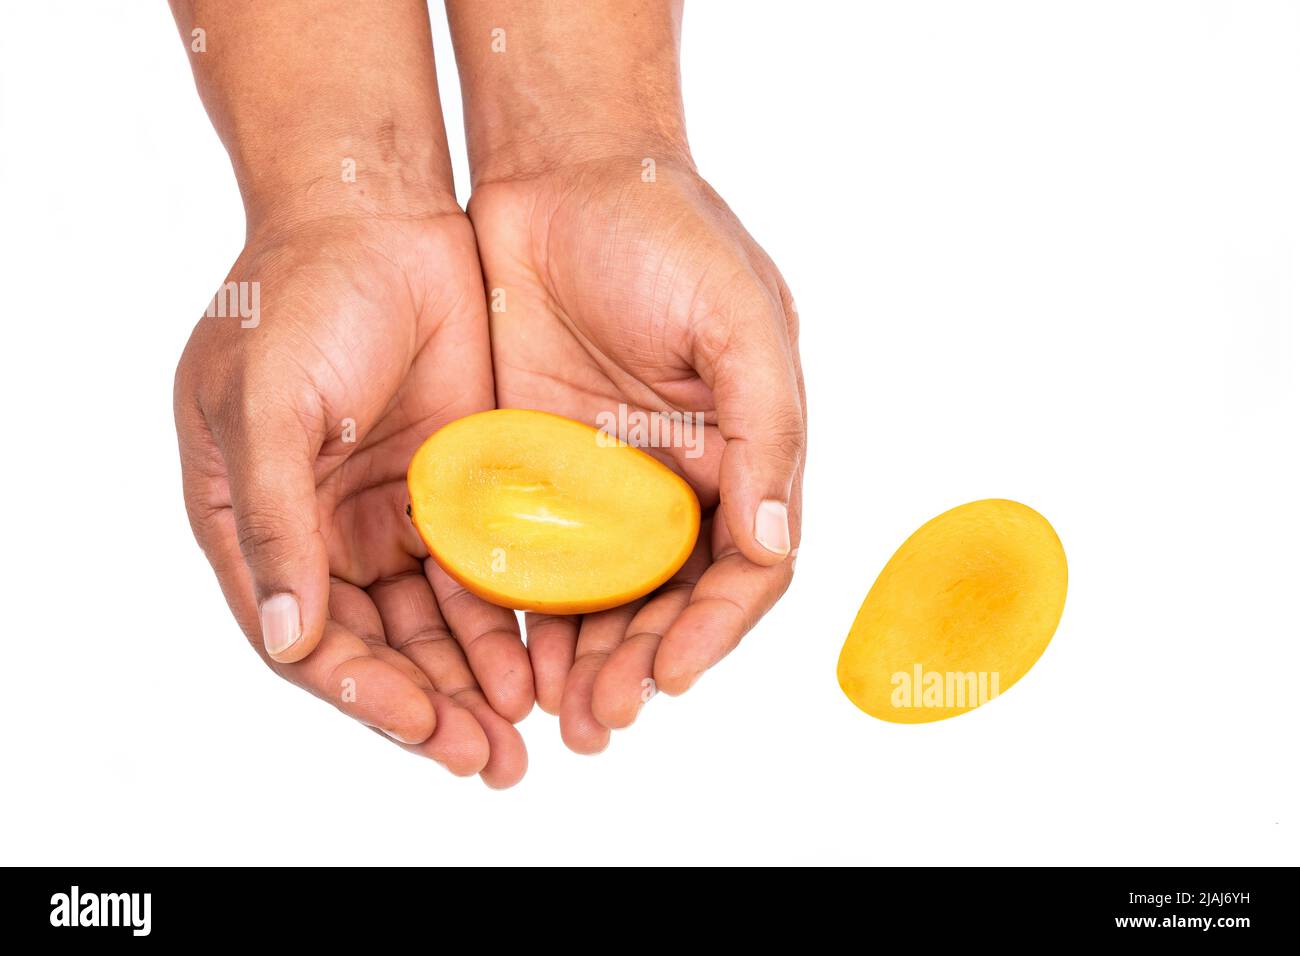 Mangifera Indica - Ripe Sugar Mango Tasty Tropical Fruit; In Male Hand On White Background Stock Photo